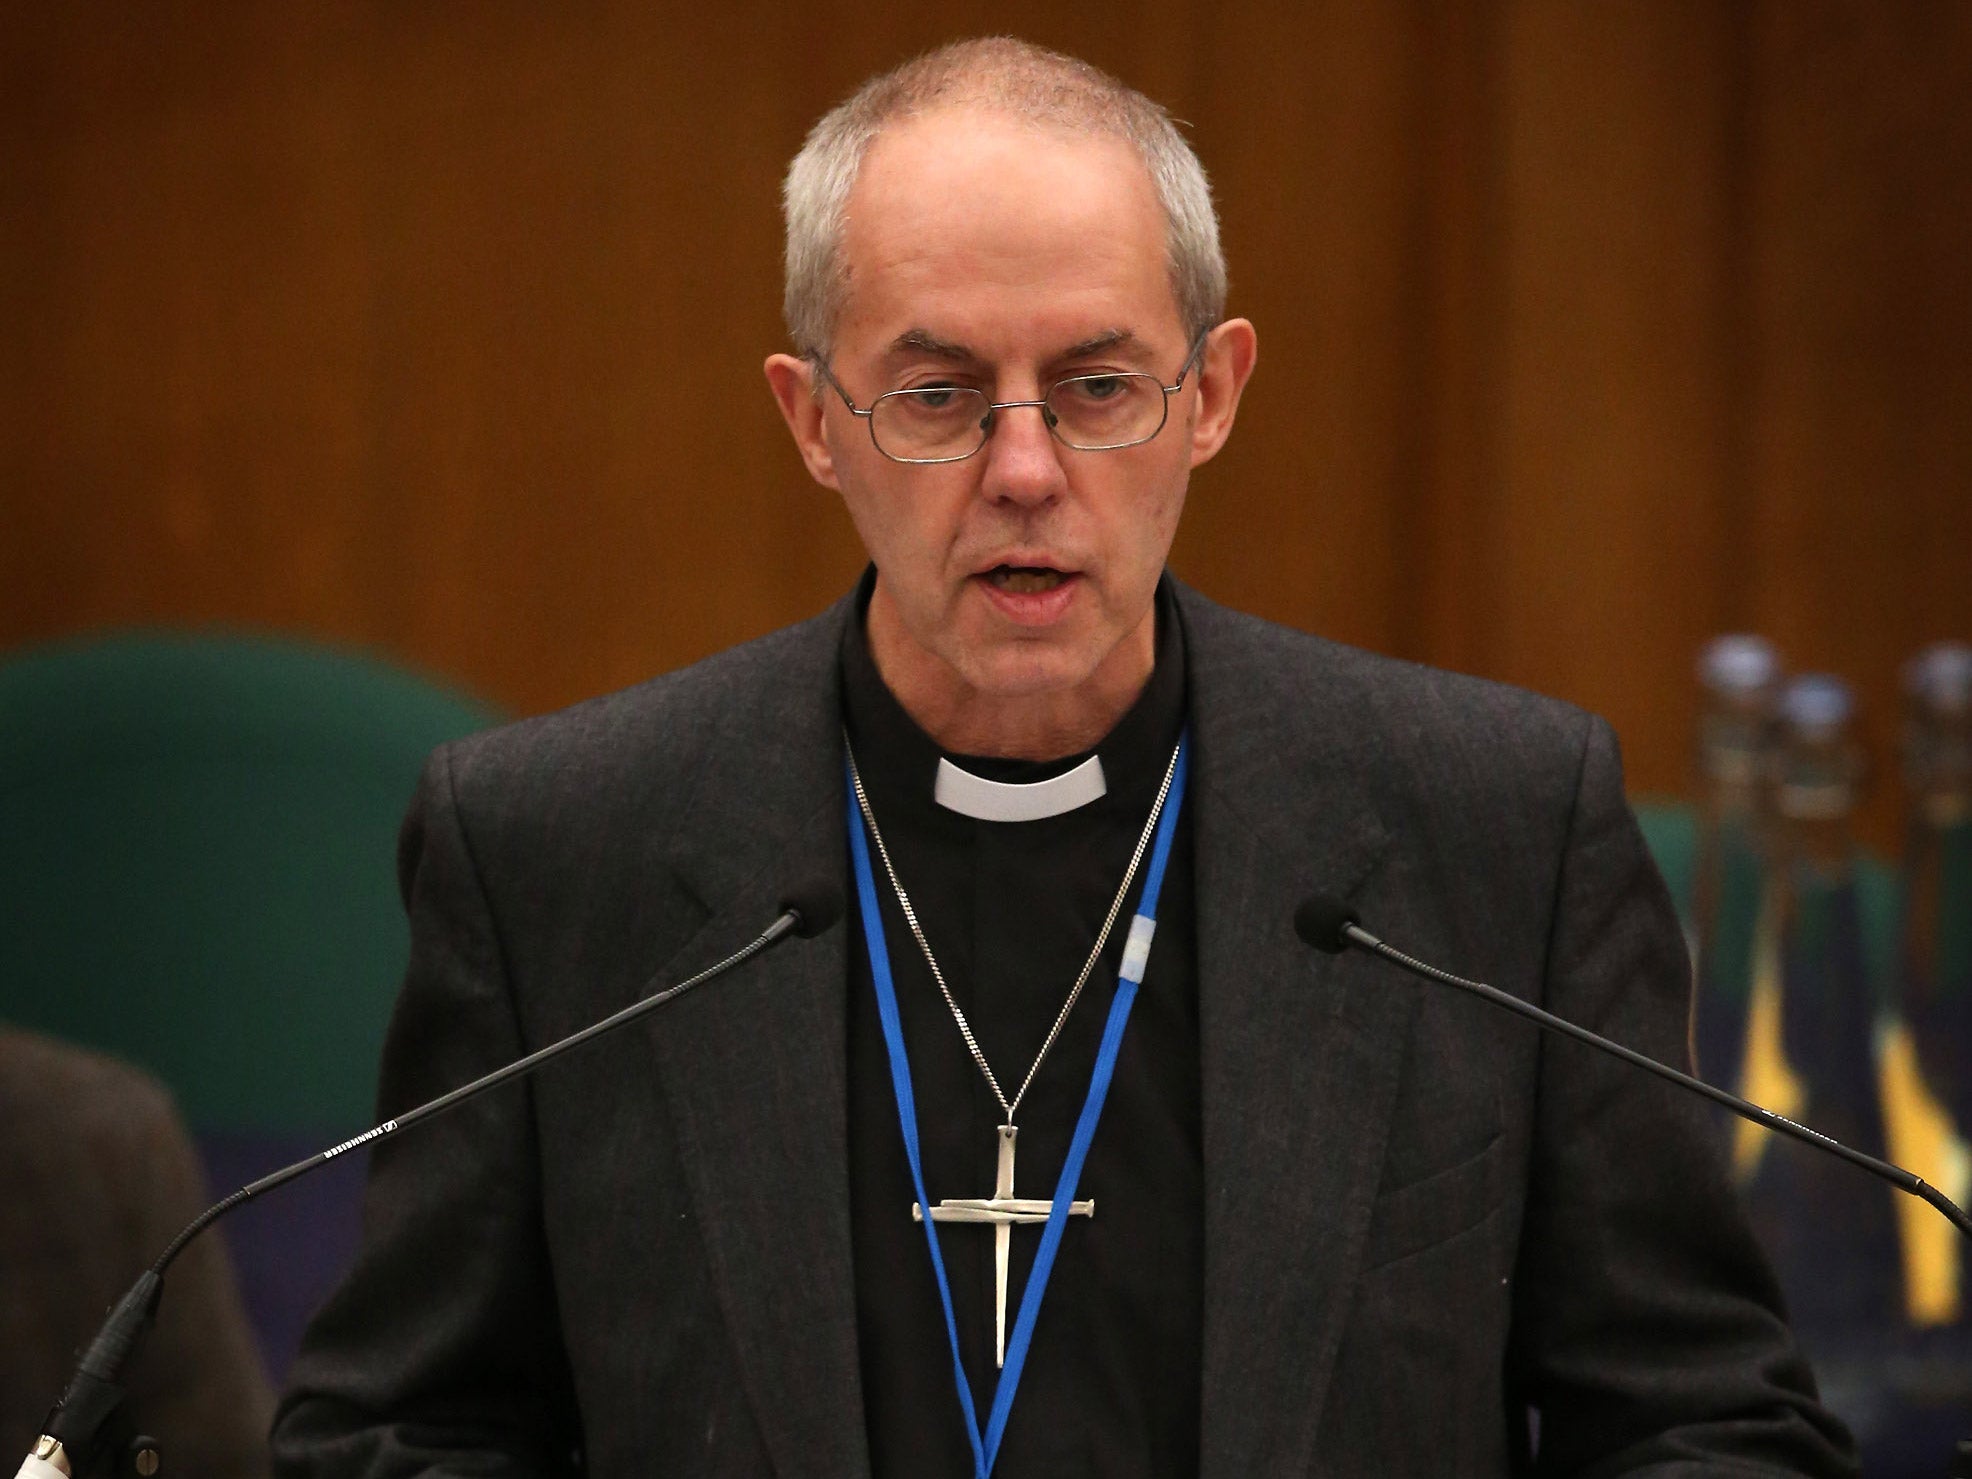 Justin Welby, Archbishop of Canterbury, met survivors of sex abuse this week